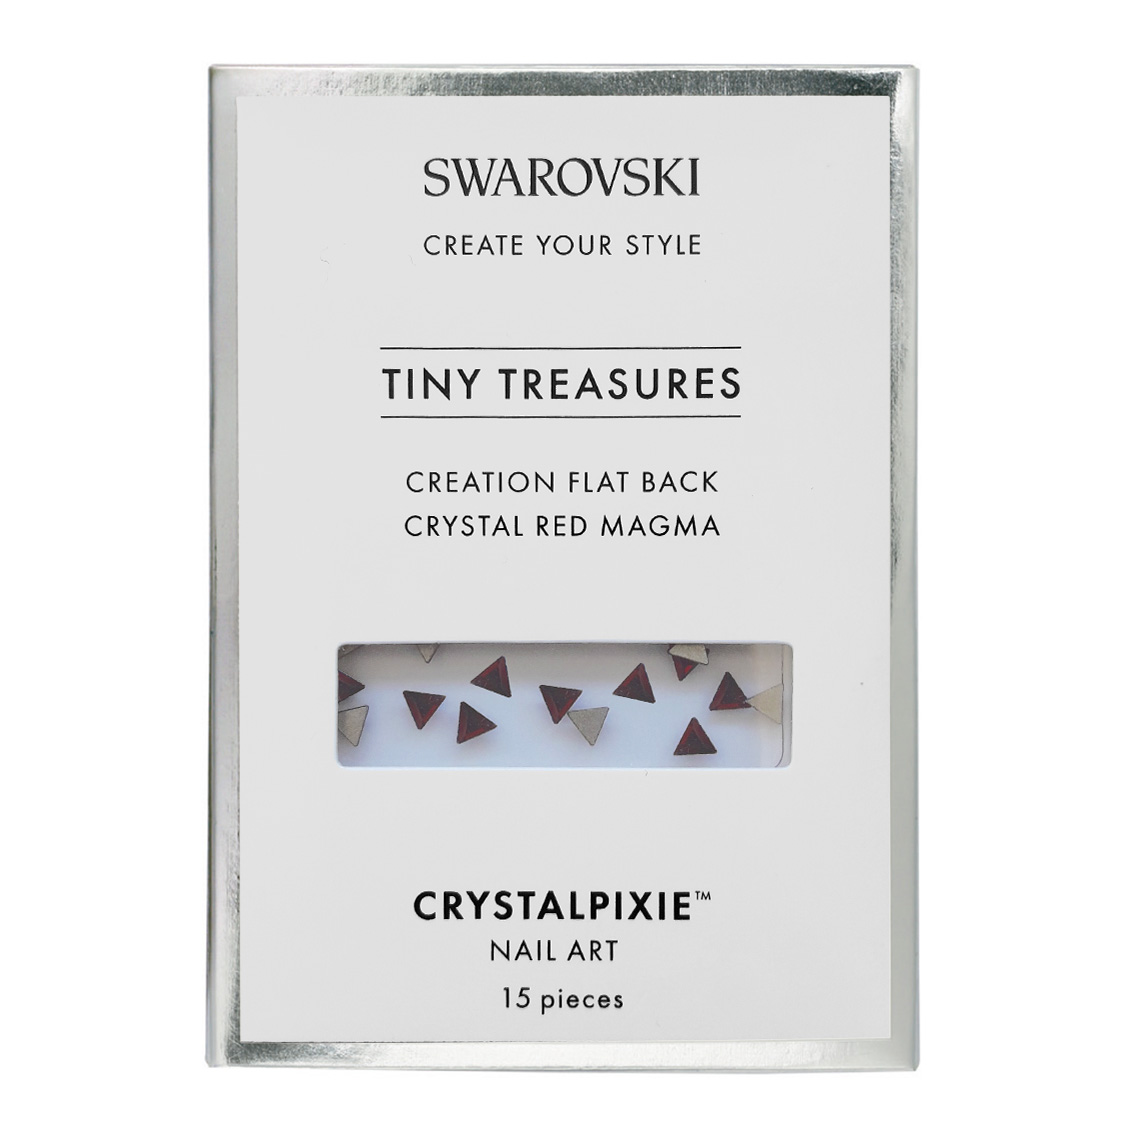 Creation Flat Back - Crystal Red Magma 15 pz - Swarovski Tiny Treasures